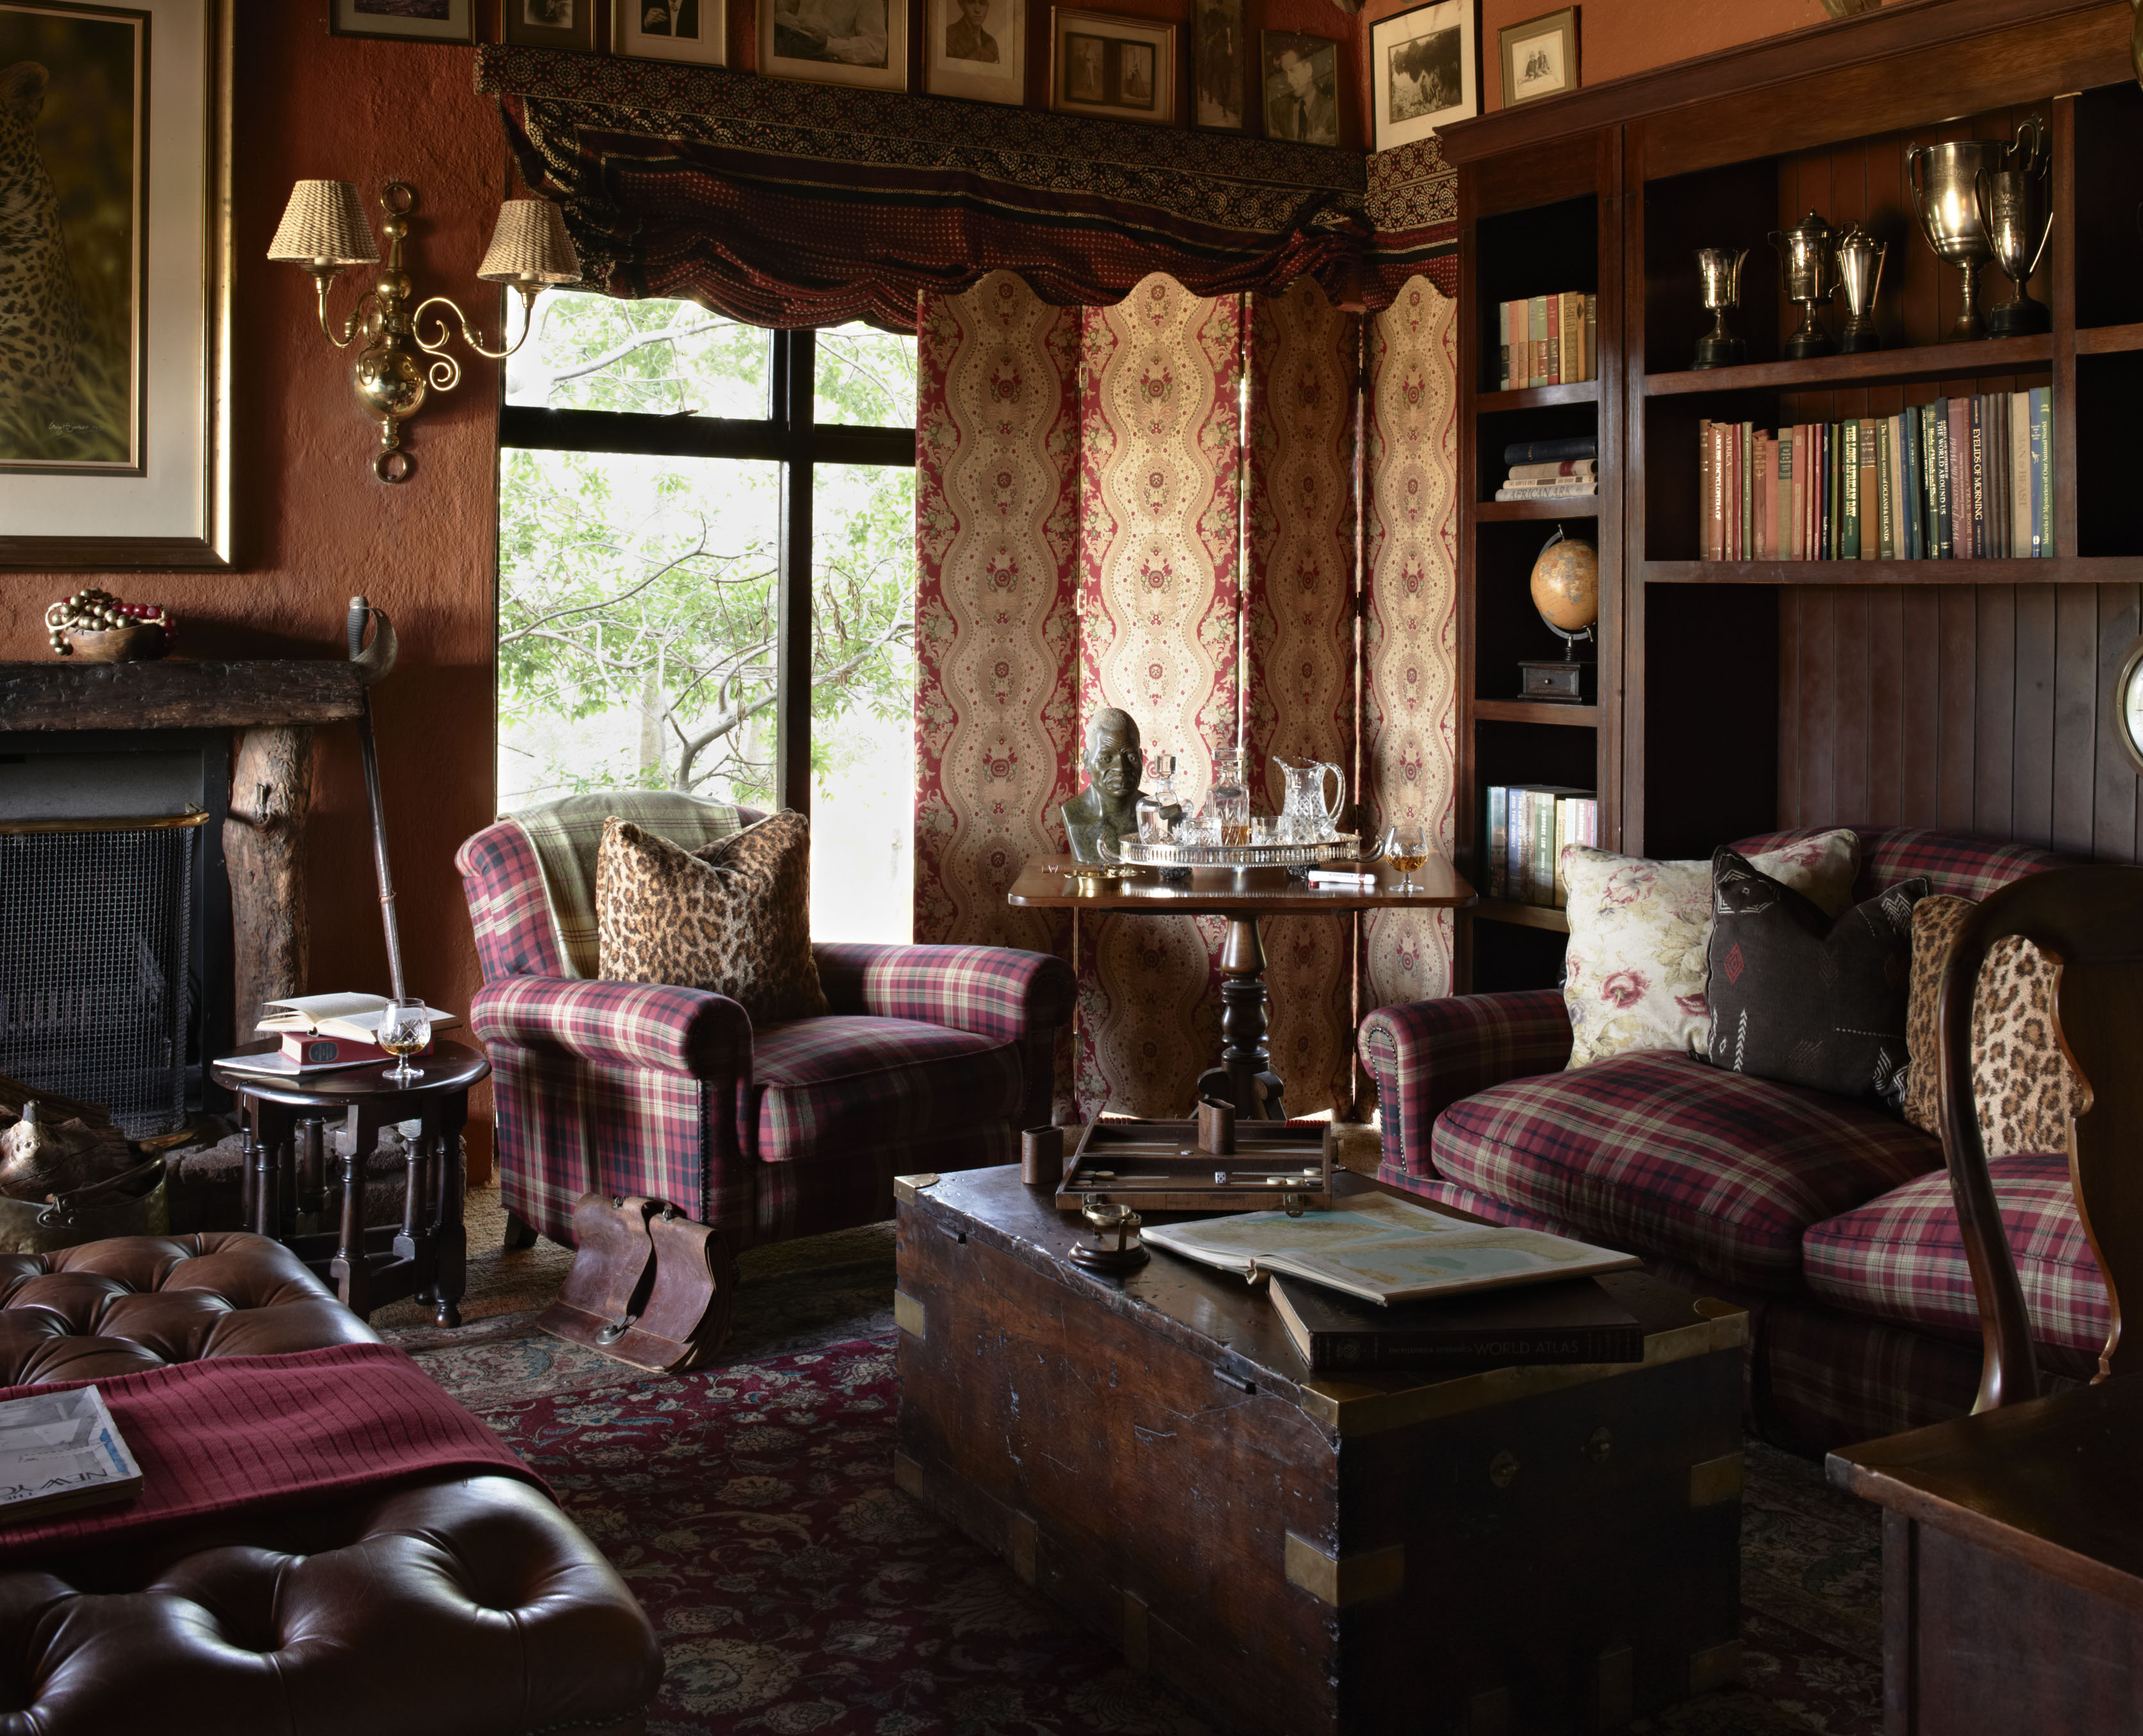 Old living room. Living Room Старая. Интерьеры Южная Африка. Гостиная Африка. Old Classic Interior.